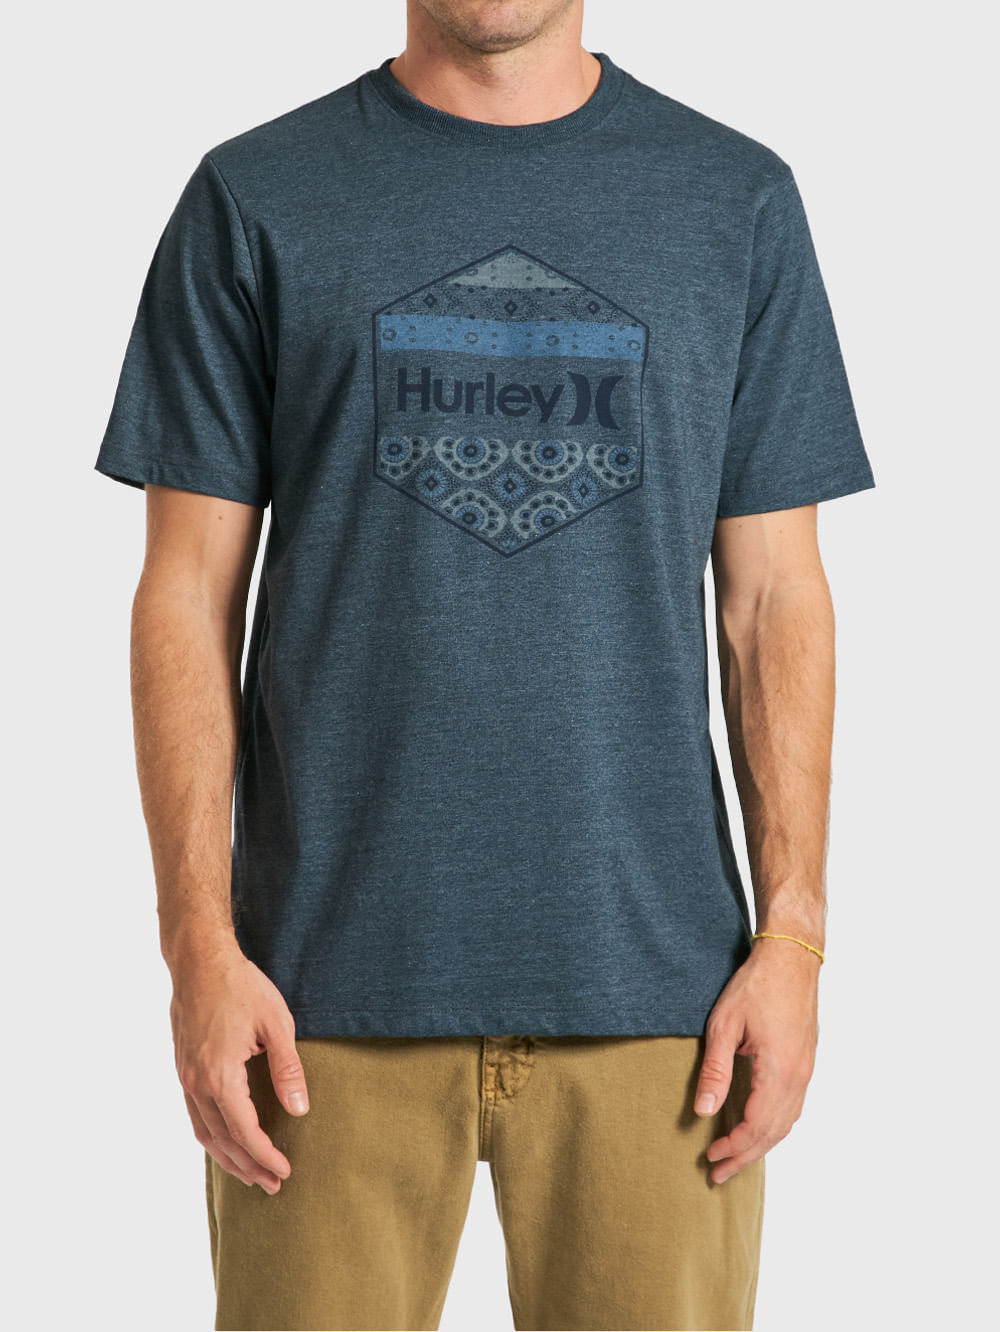 Camiseta Hurley Redstone Azul Marinho